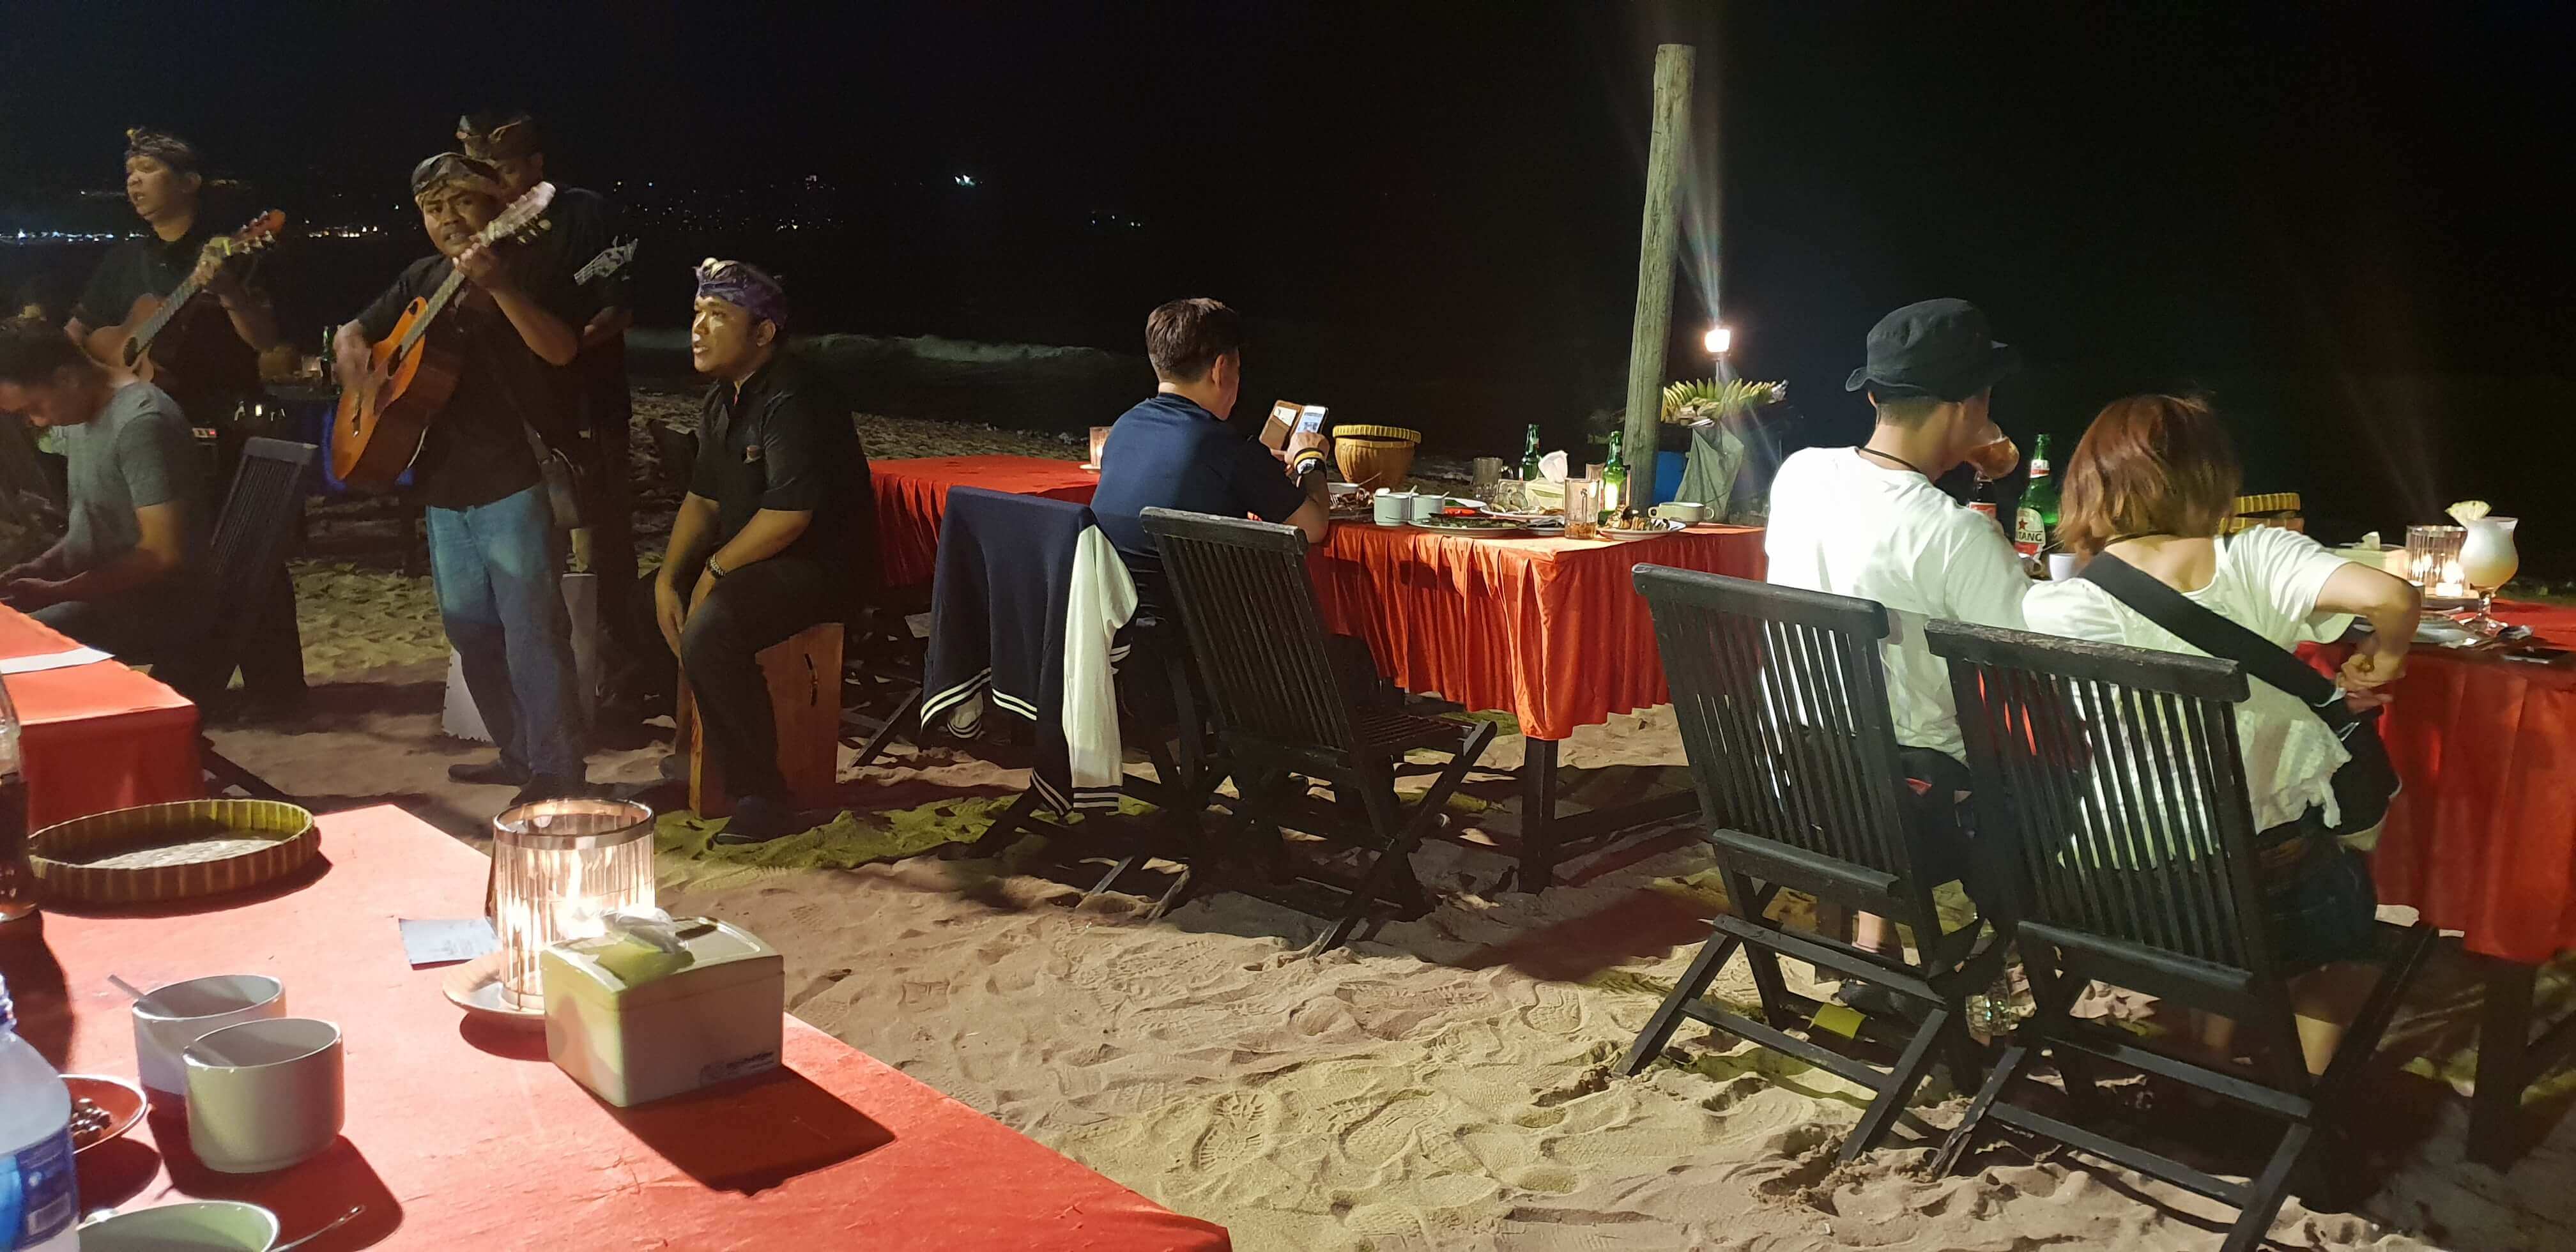 On-beach dining experience at Jimbaran Bay